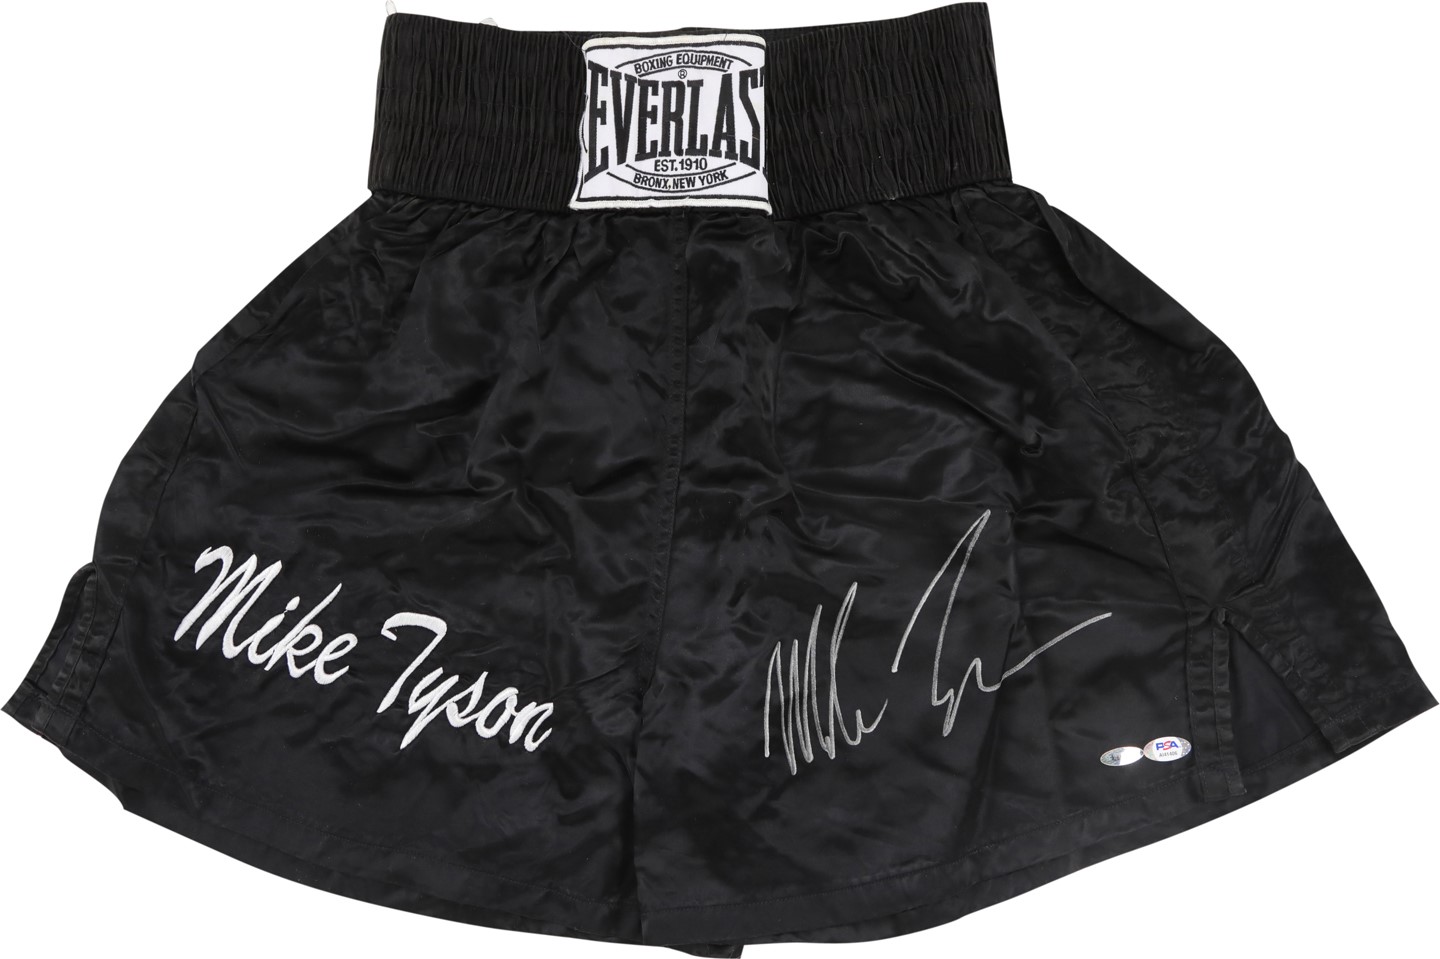 - Mike Tyson Signed Boxing Trunks PSA